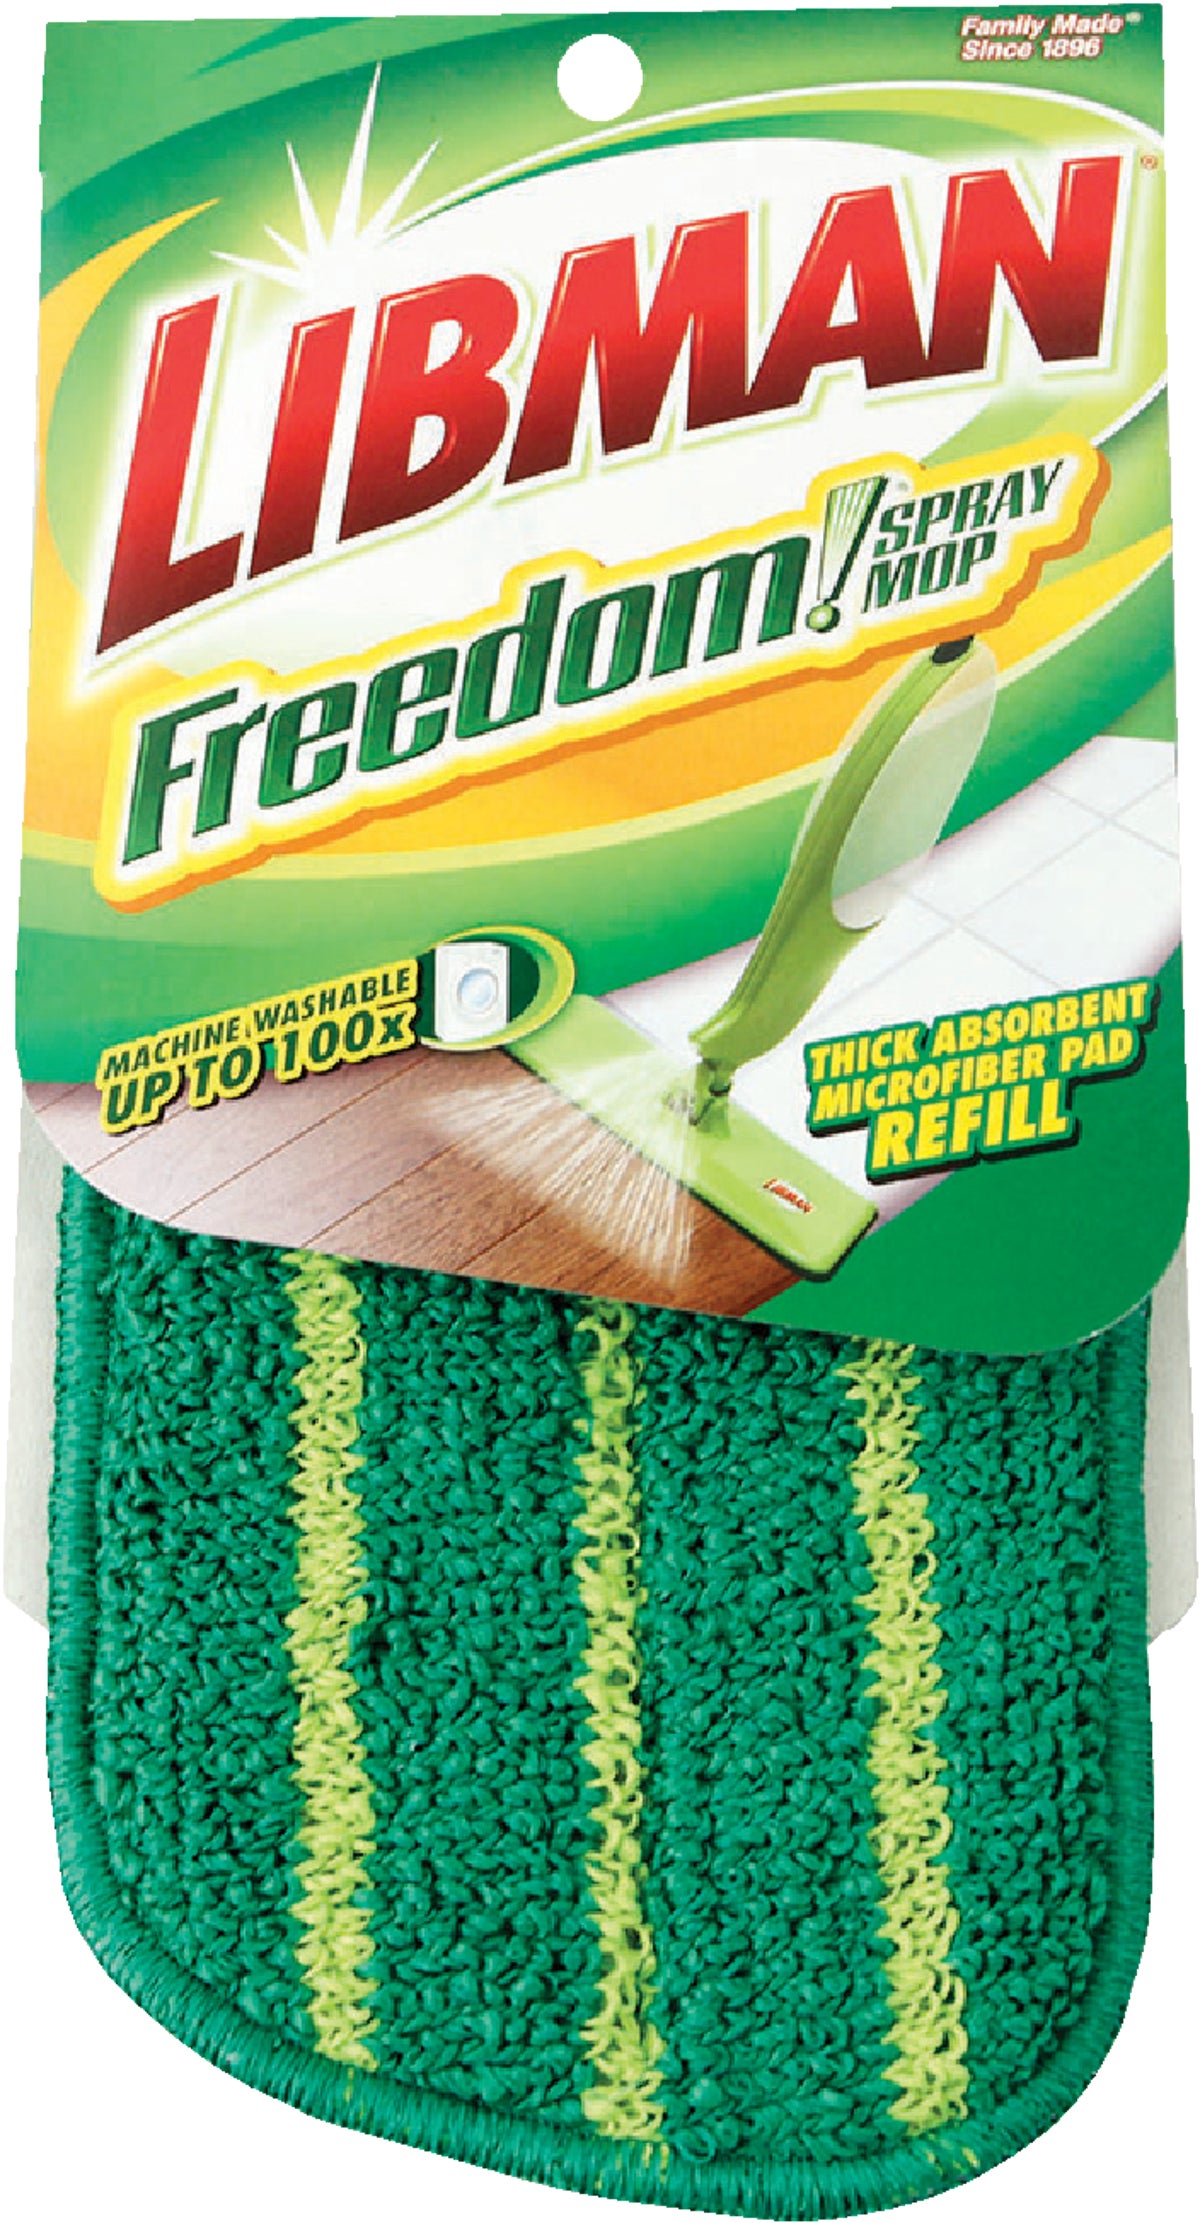 Buy Libman Freedom Spray Mop Refill